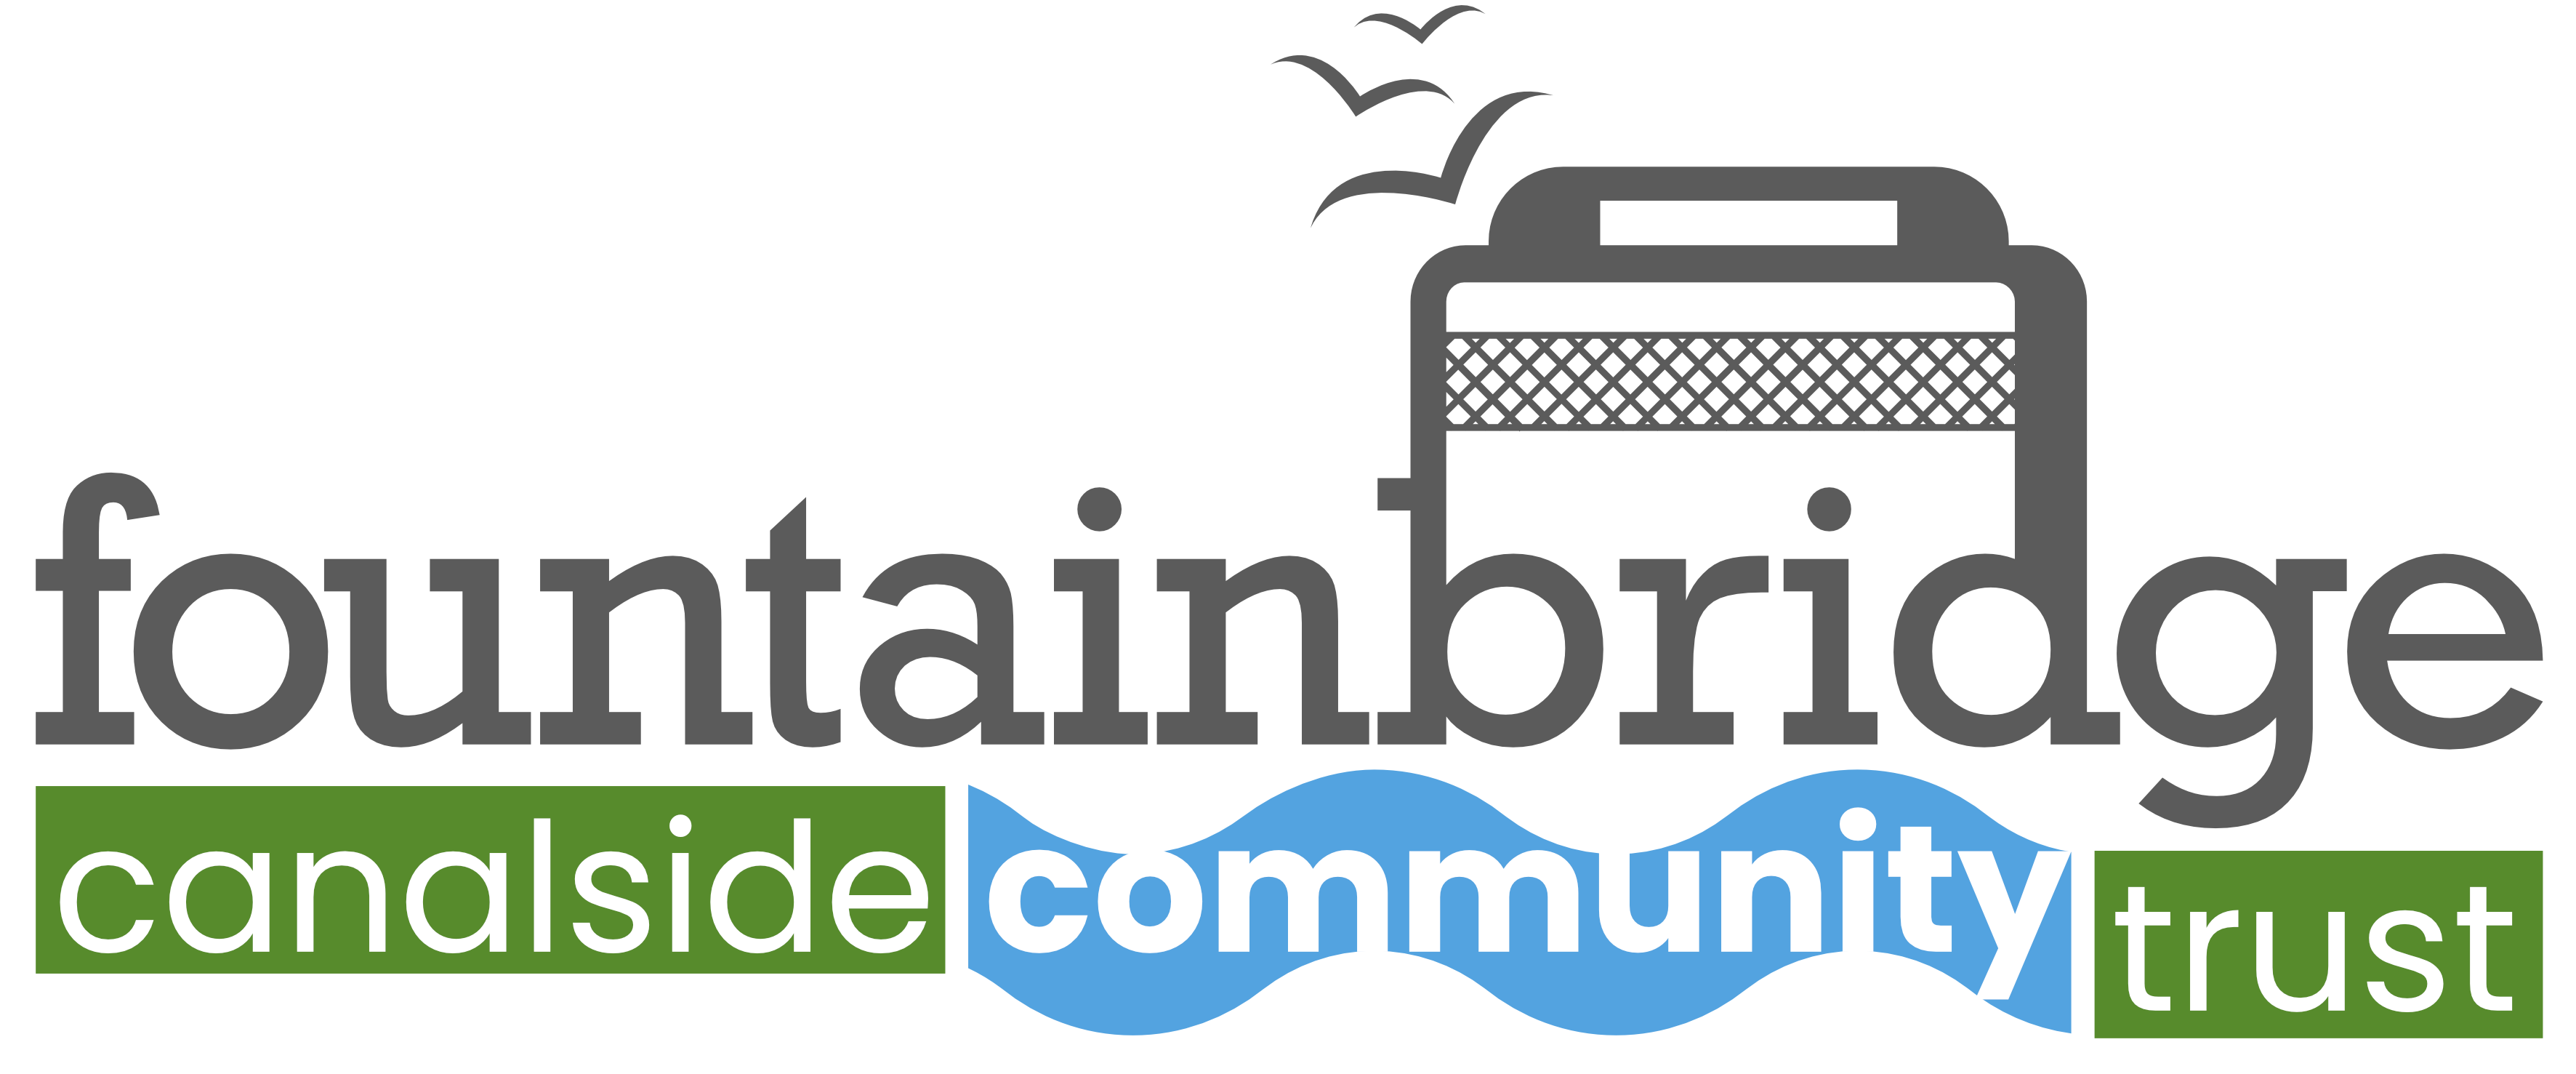 Fountainbridge Canalside Community Trust logo